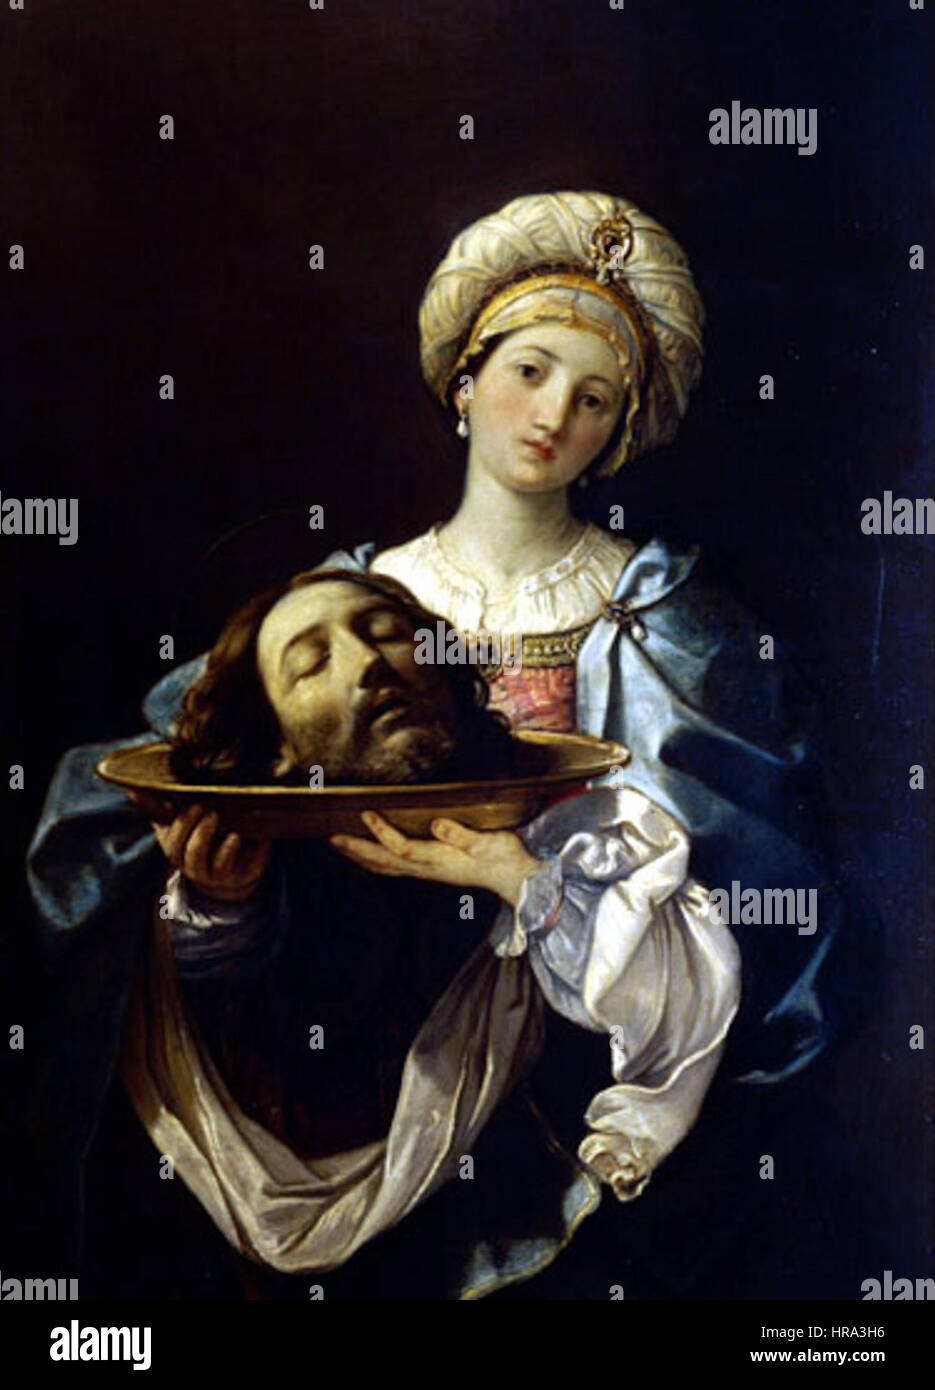 Reni, Guido - Salome with the Head of John the Baptist - 1630-1635 Stock Photo